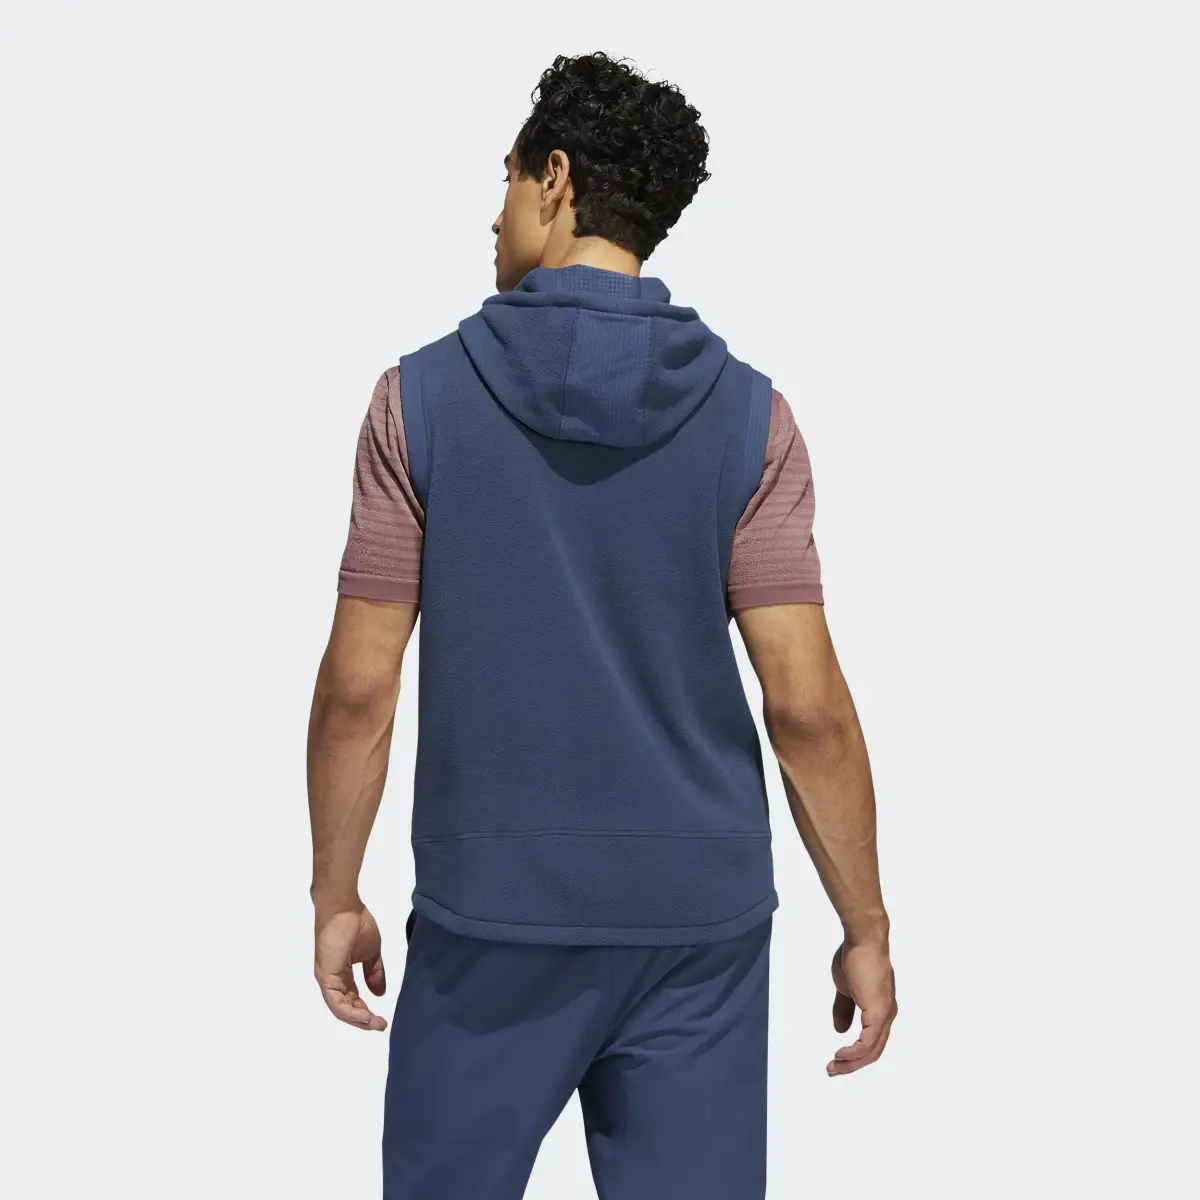 Adidas Statement Full-Zip Hooded Vest. 3